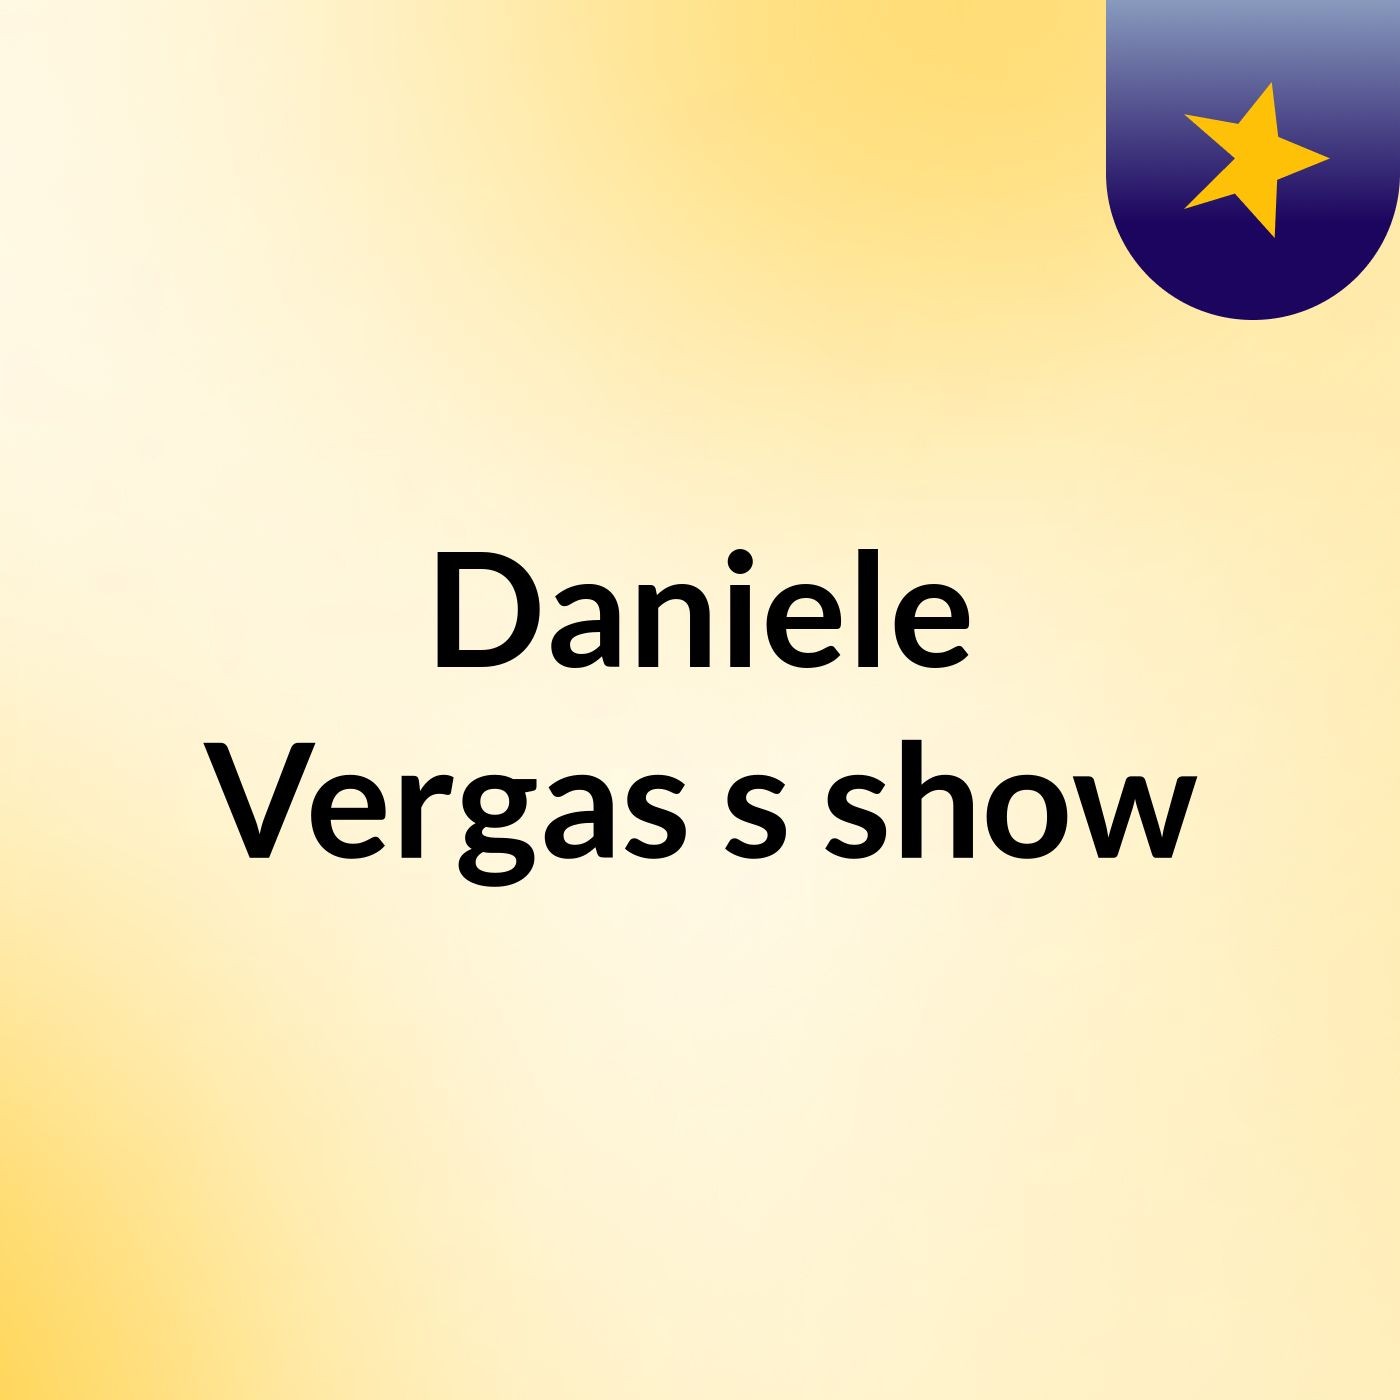 Daniele Vergas's show